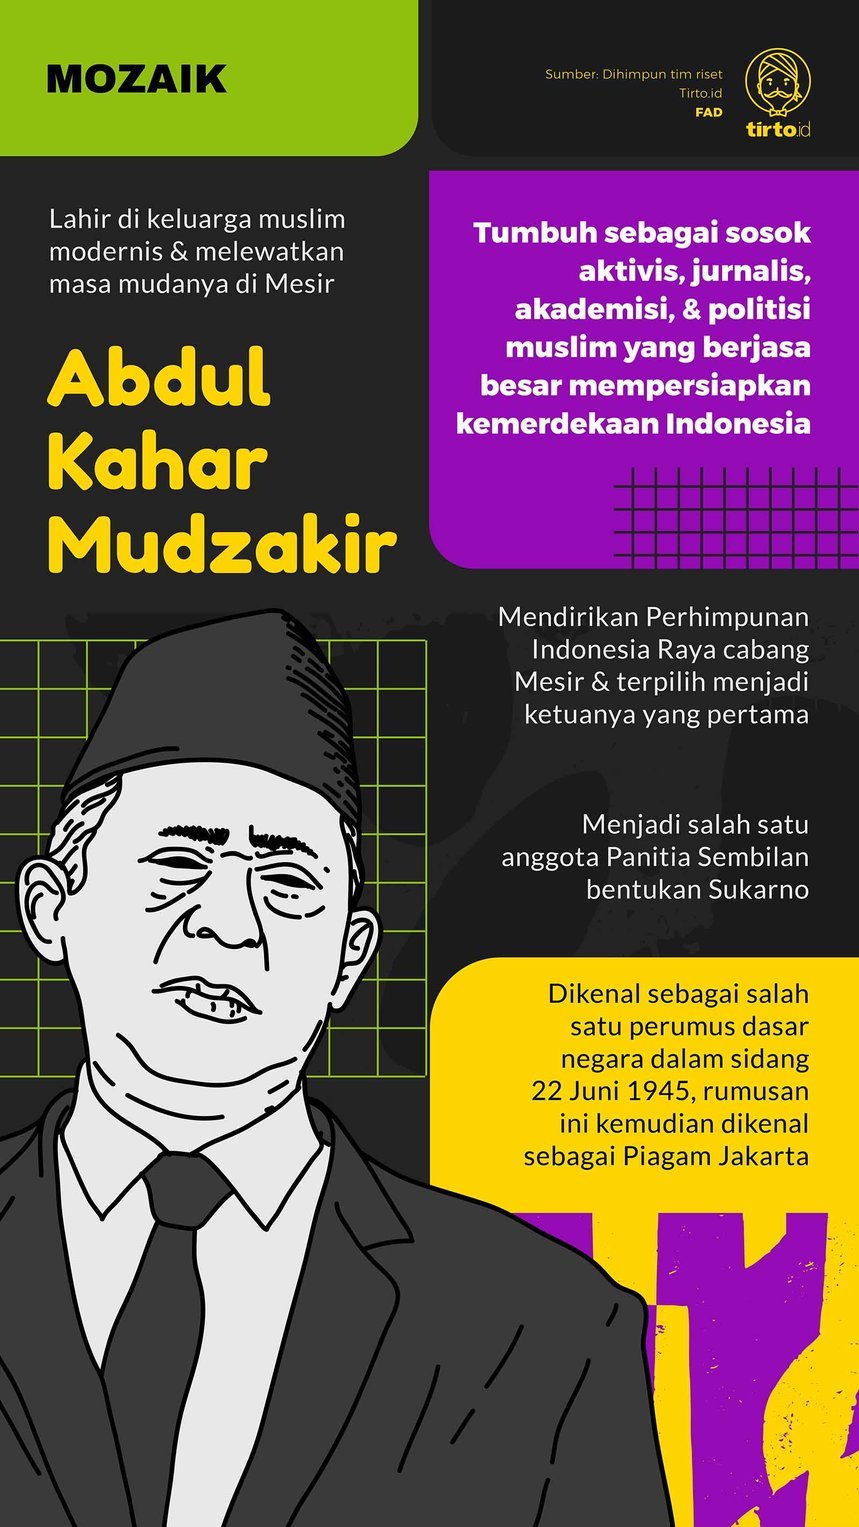 Infografik Mozaik Abdul Khahar Mudzakir